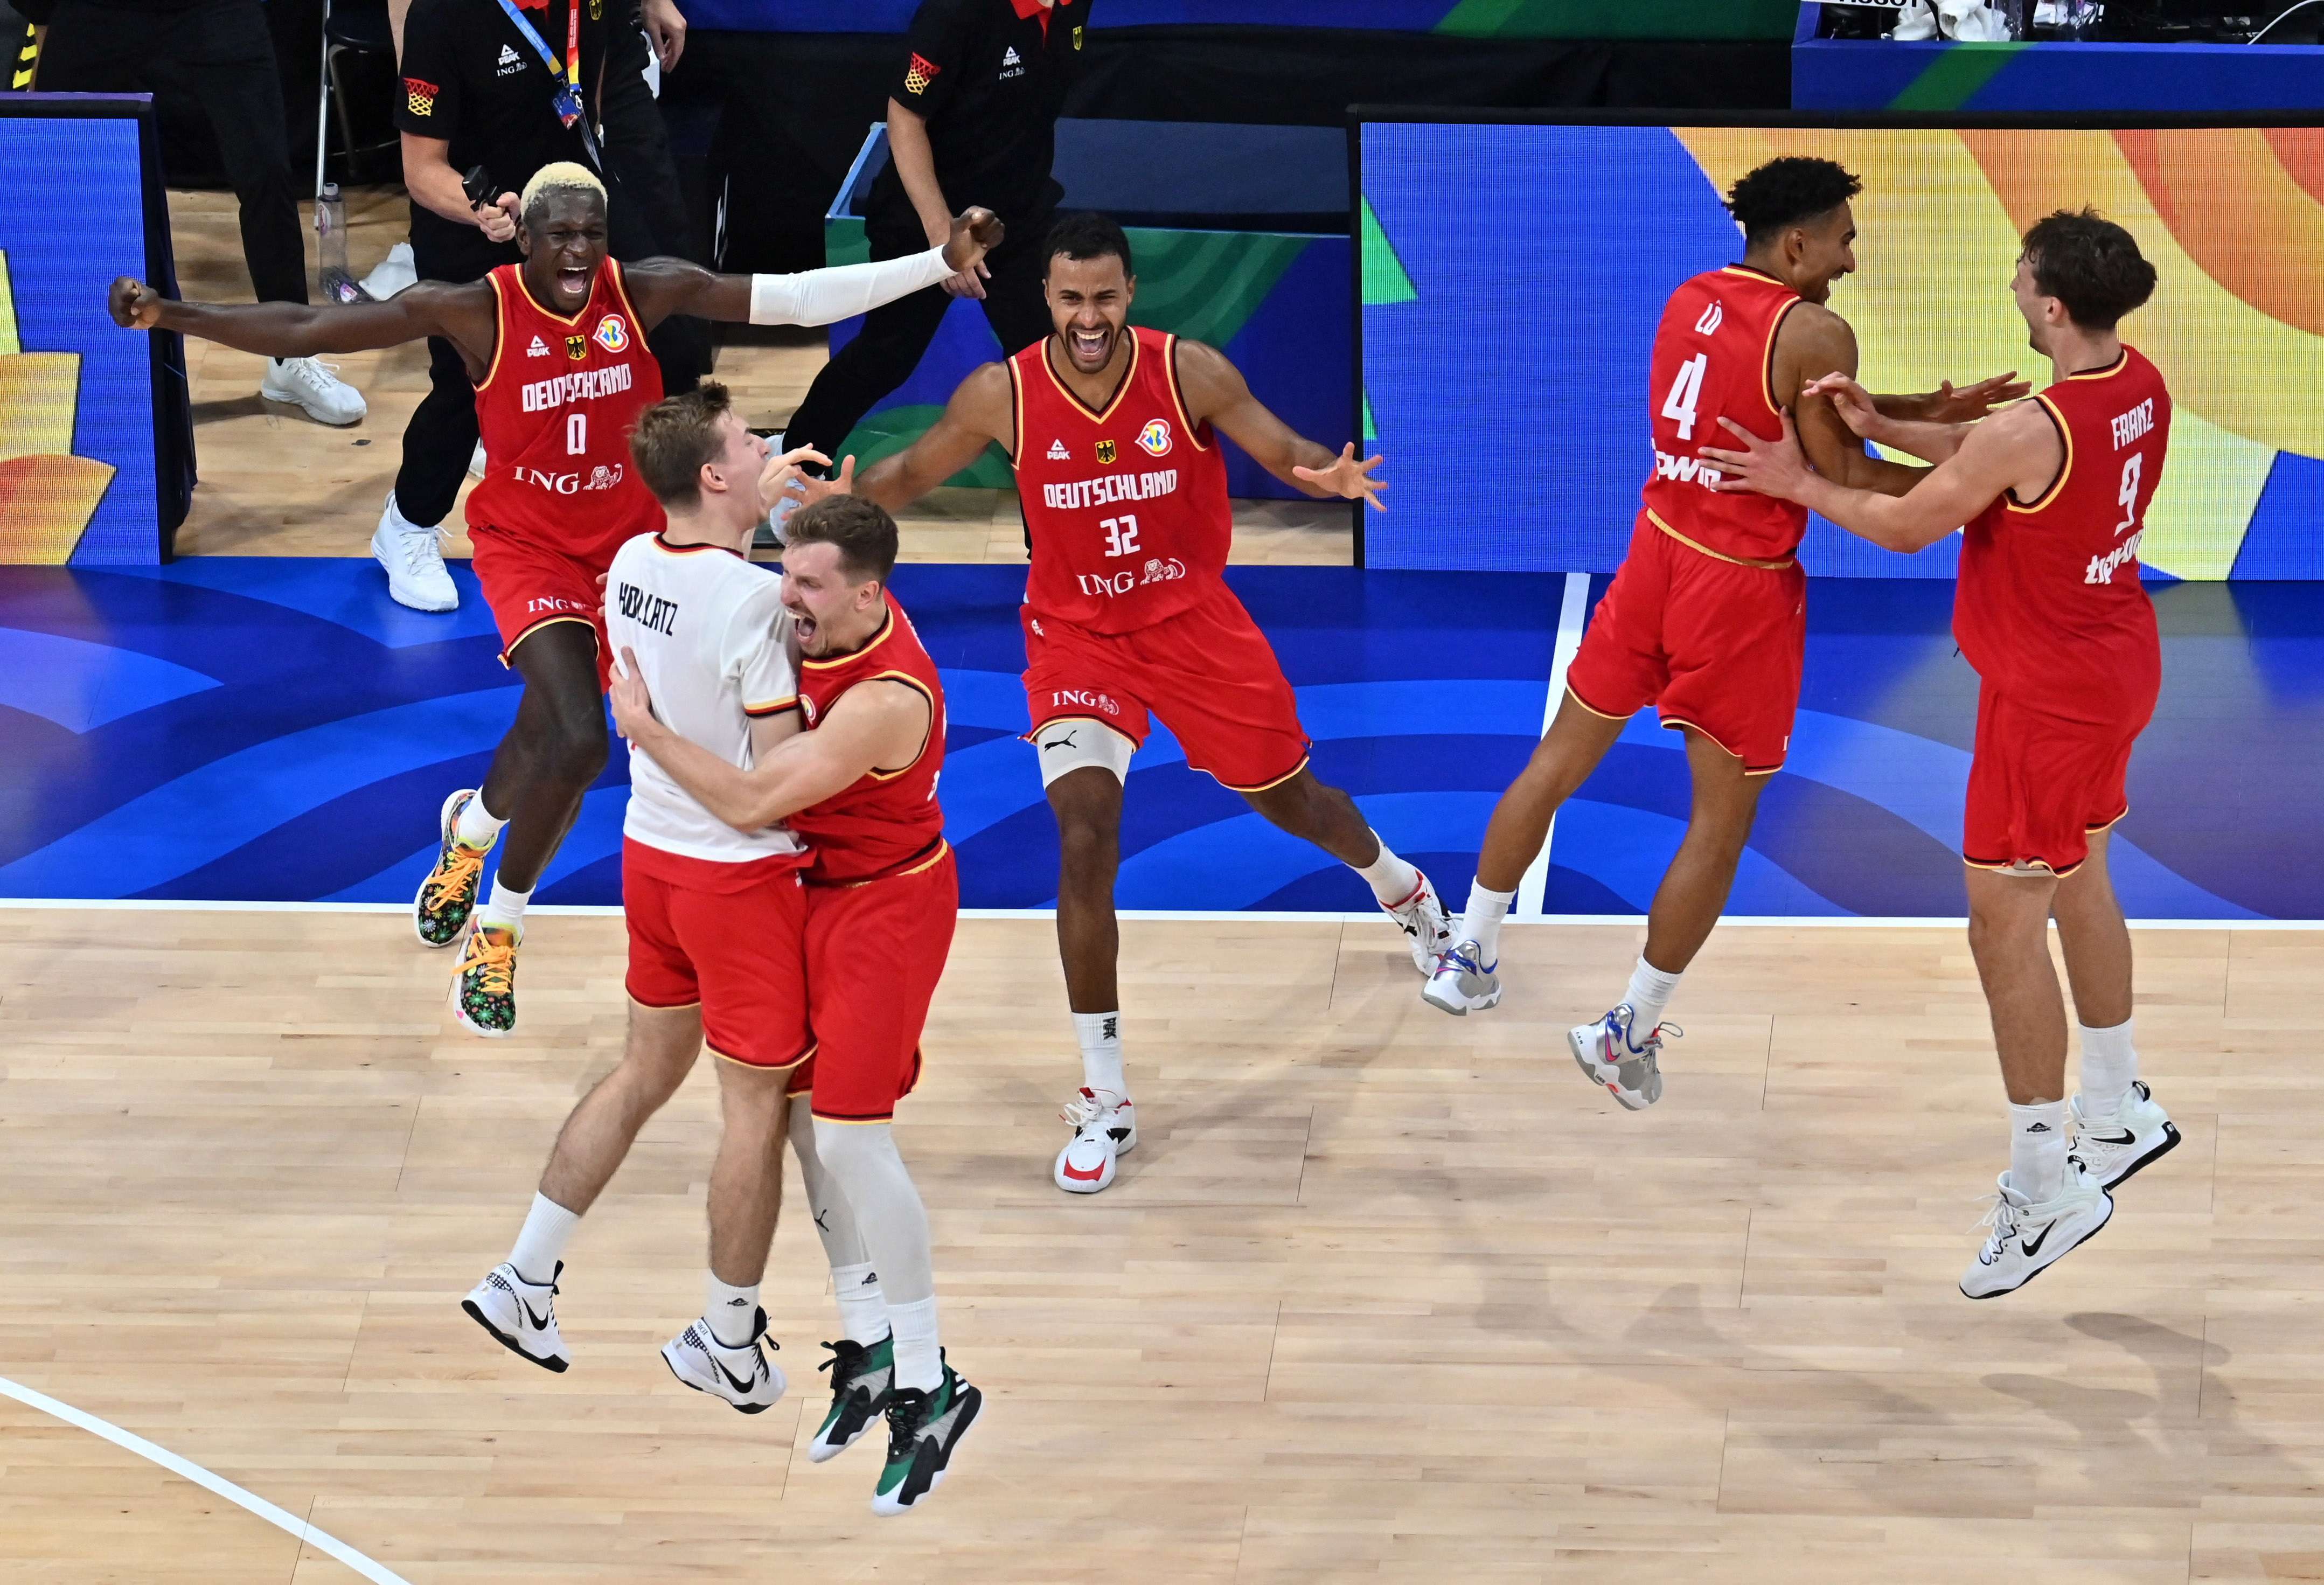 Basketball Germany score massive upset over U.S